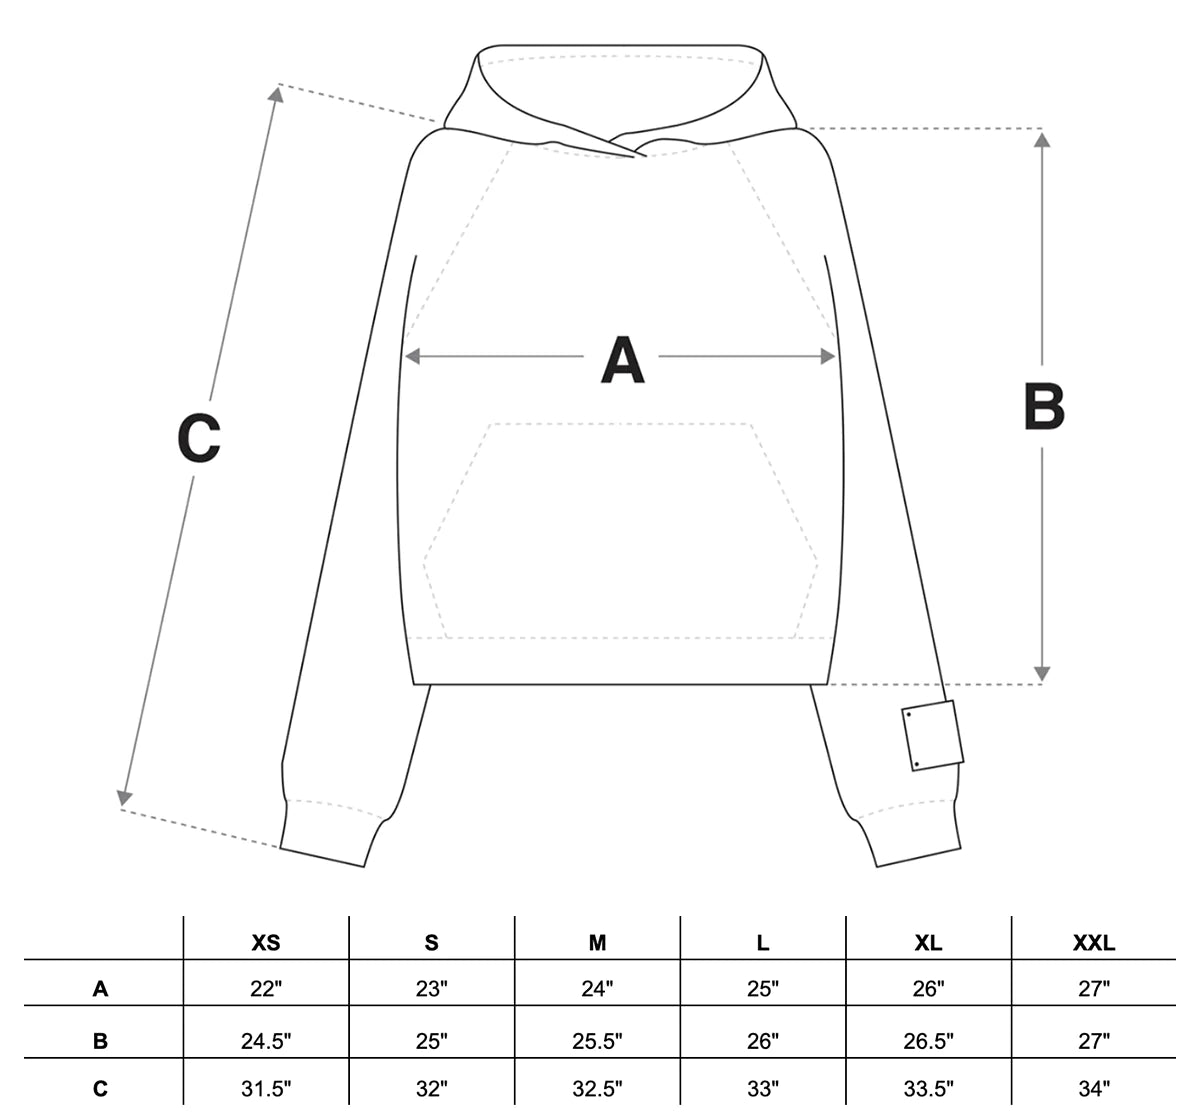 Mountain Logo Hooded Sweatshirt in Royal Blue Size Guide